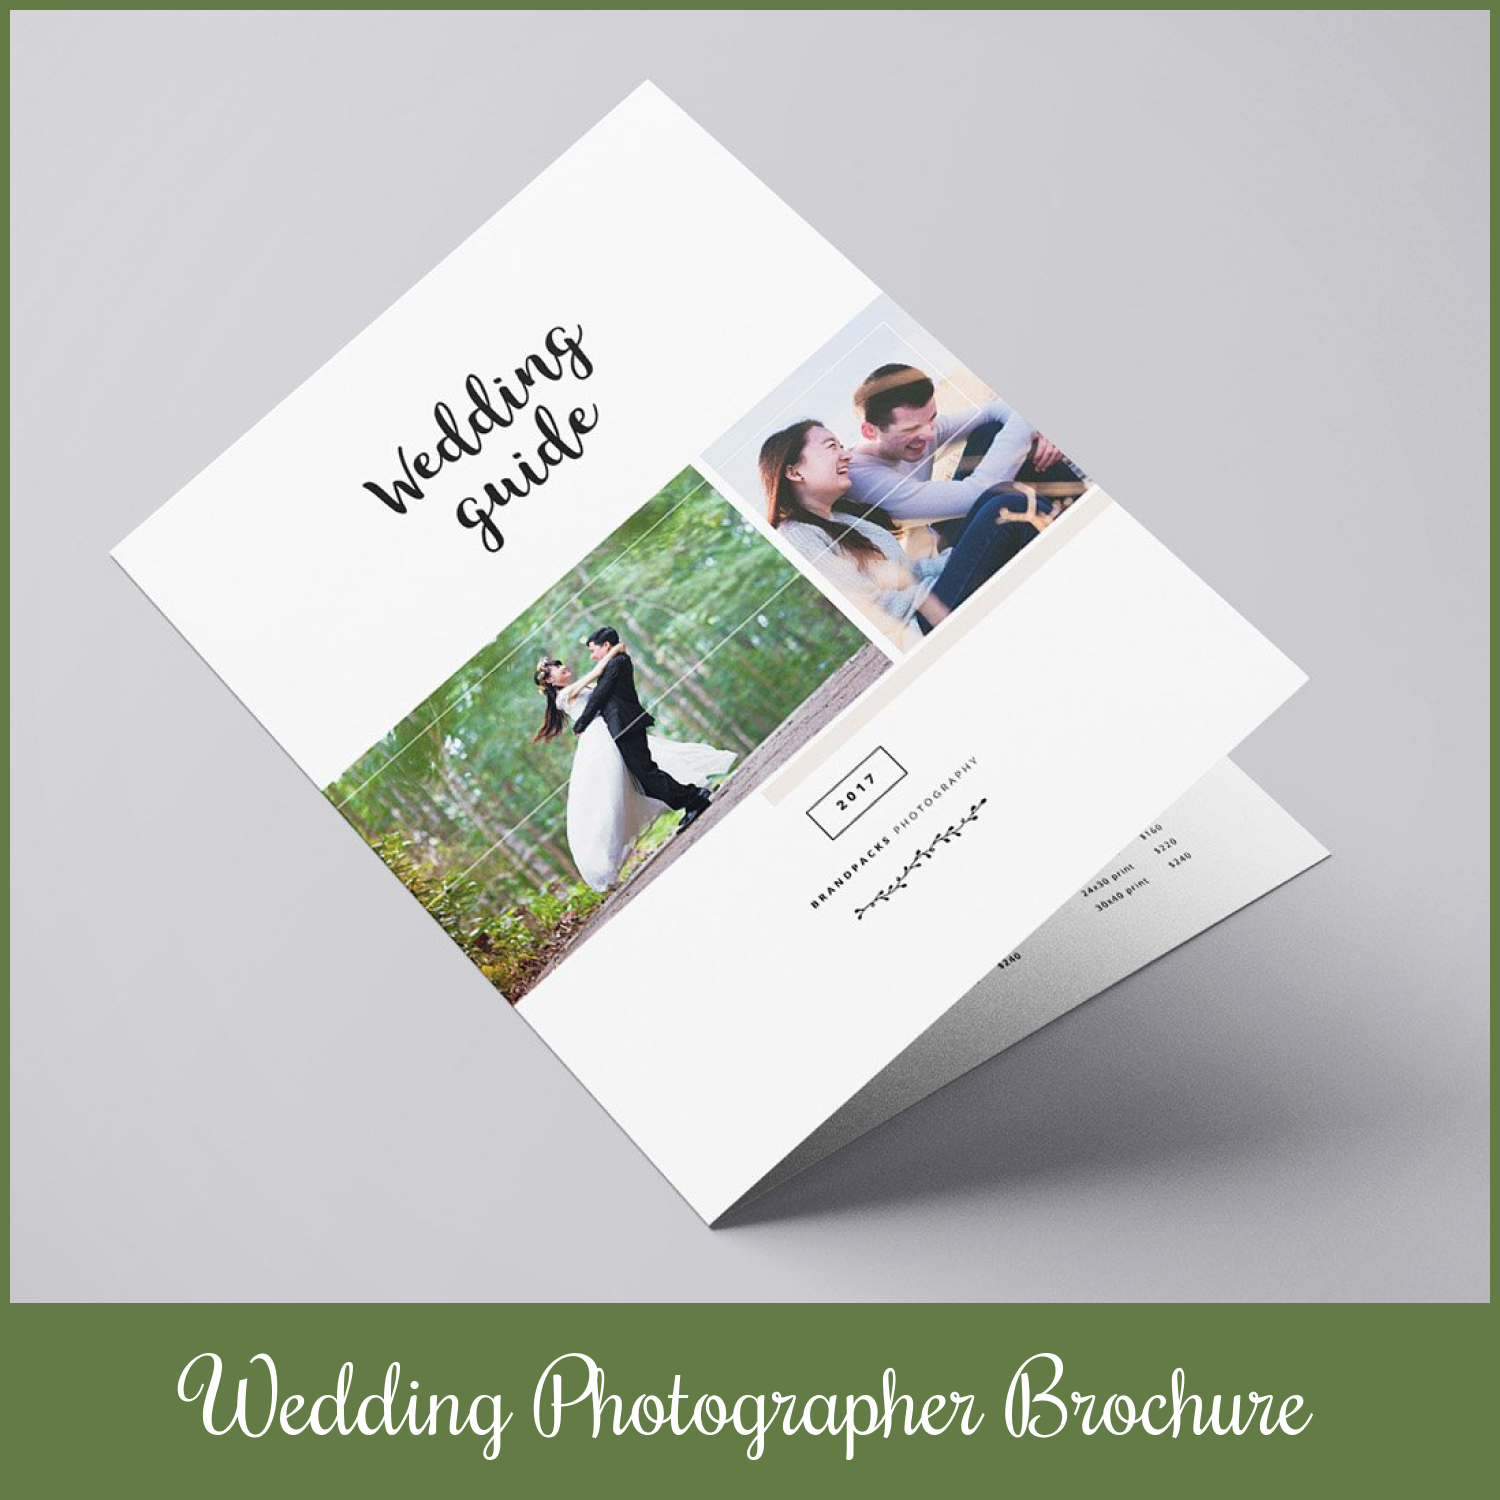 Preview wedding photographer brochure.